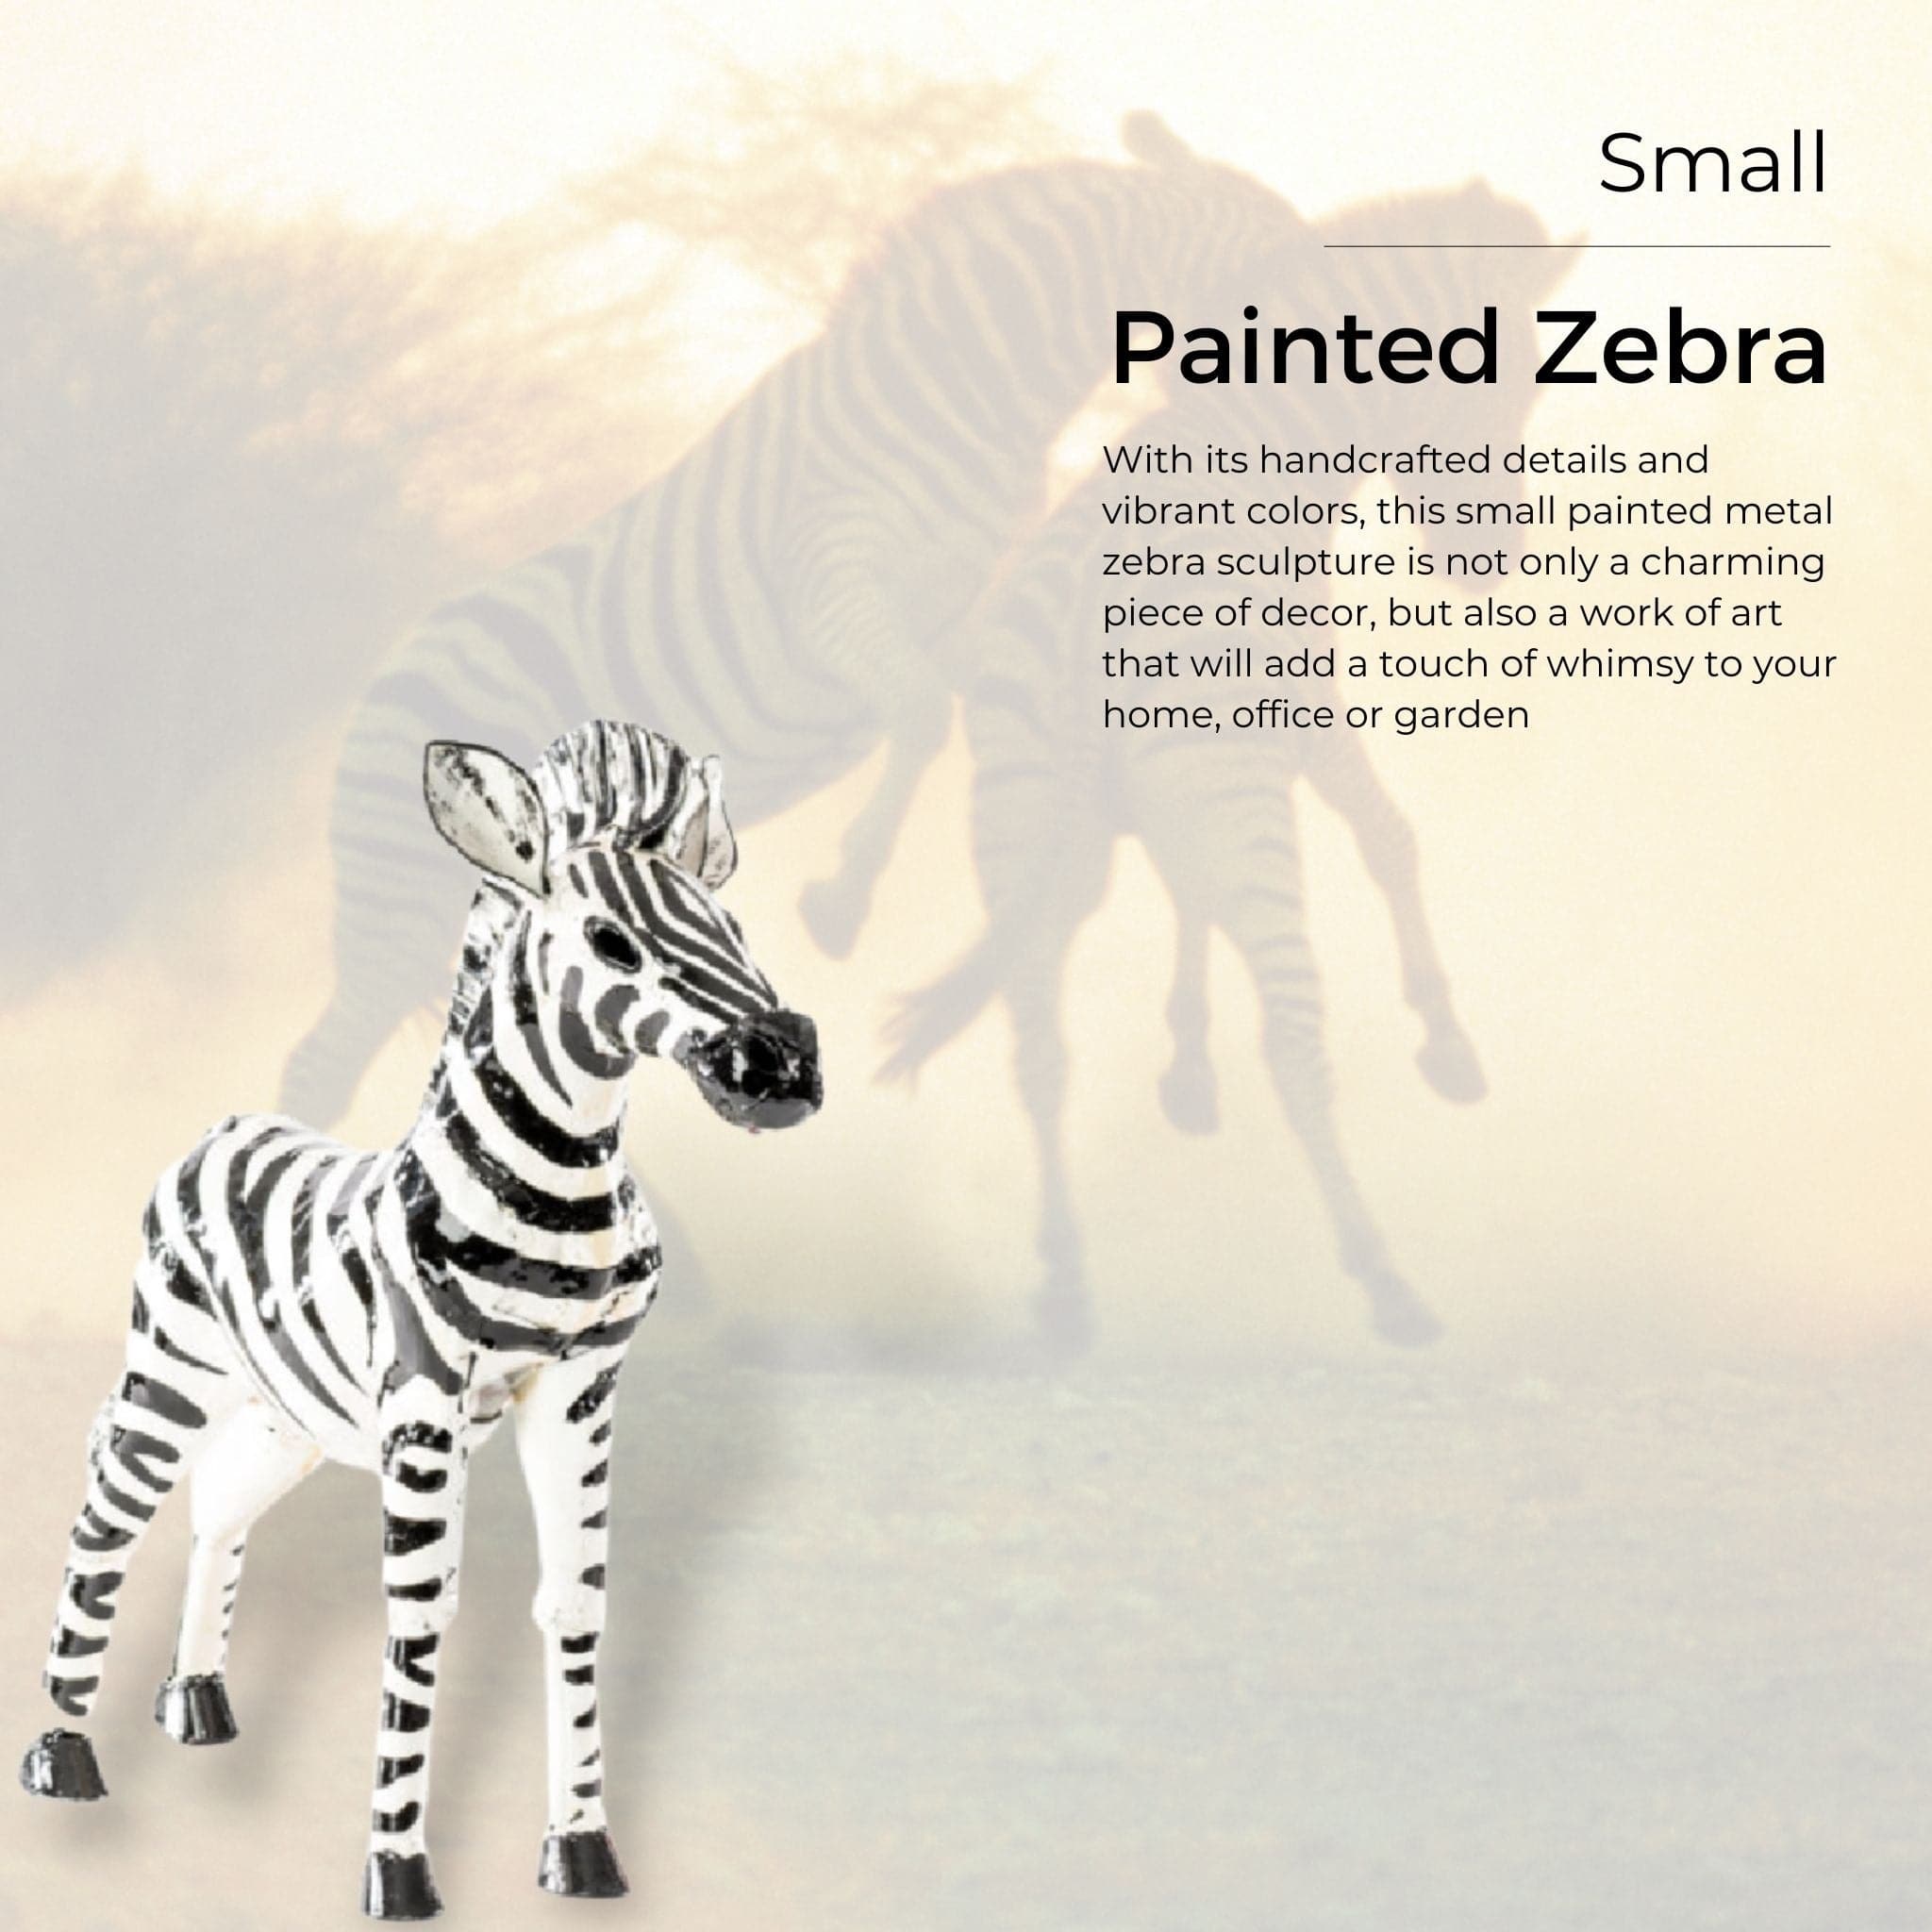 Small Painted Zebra - Pangea Sculptures